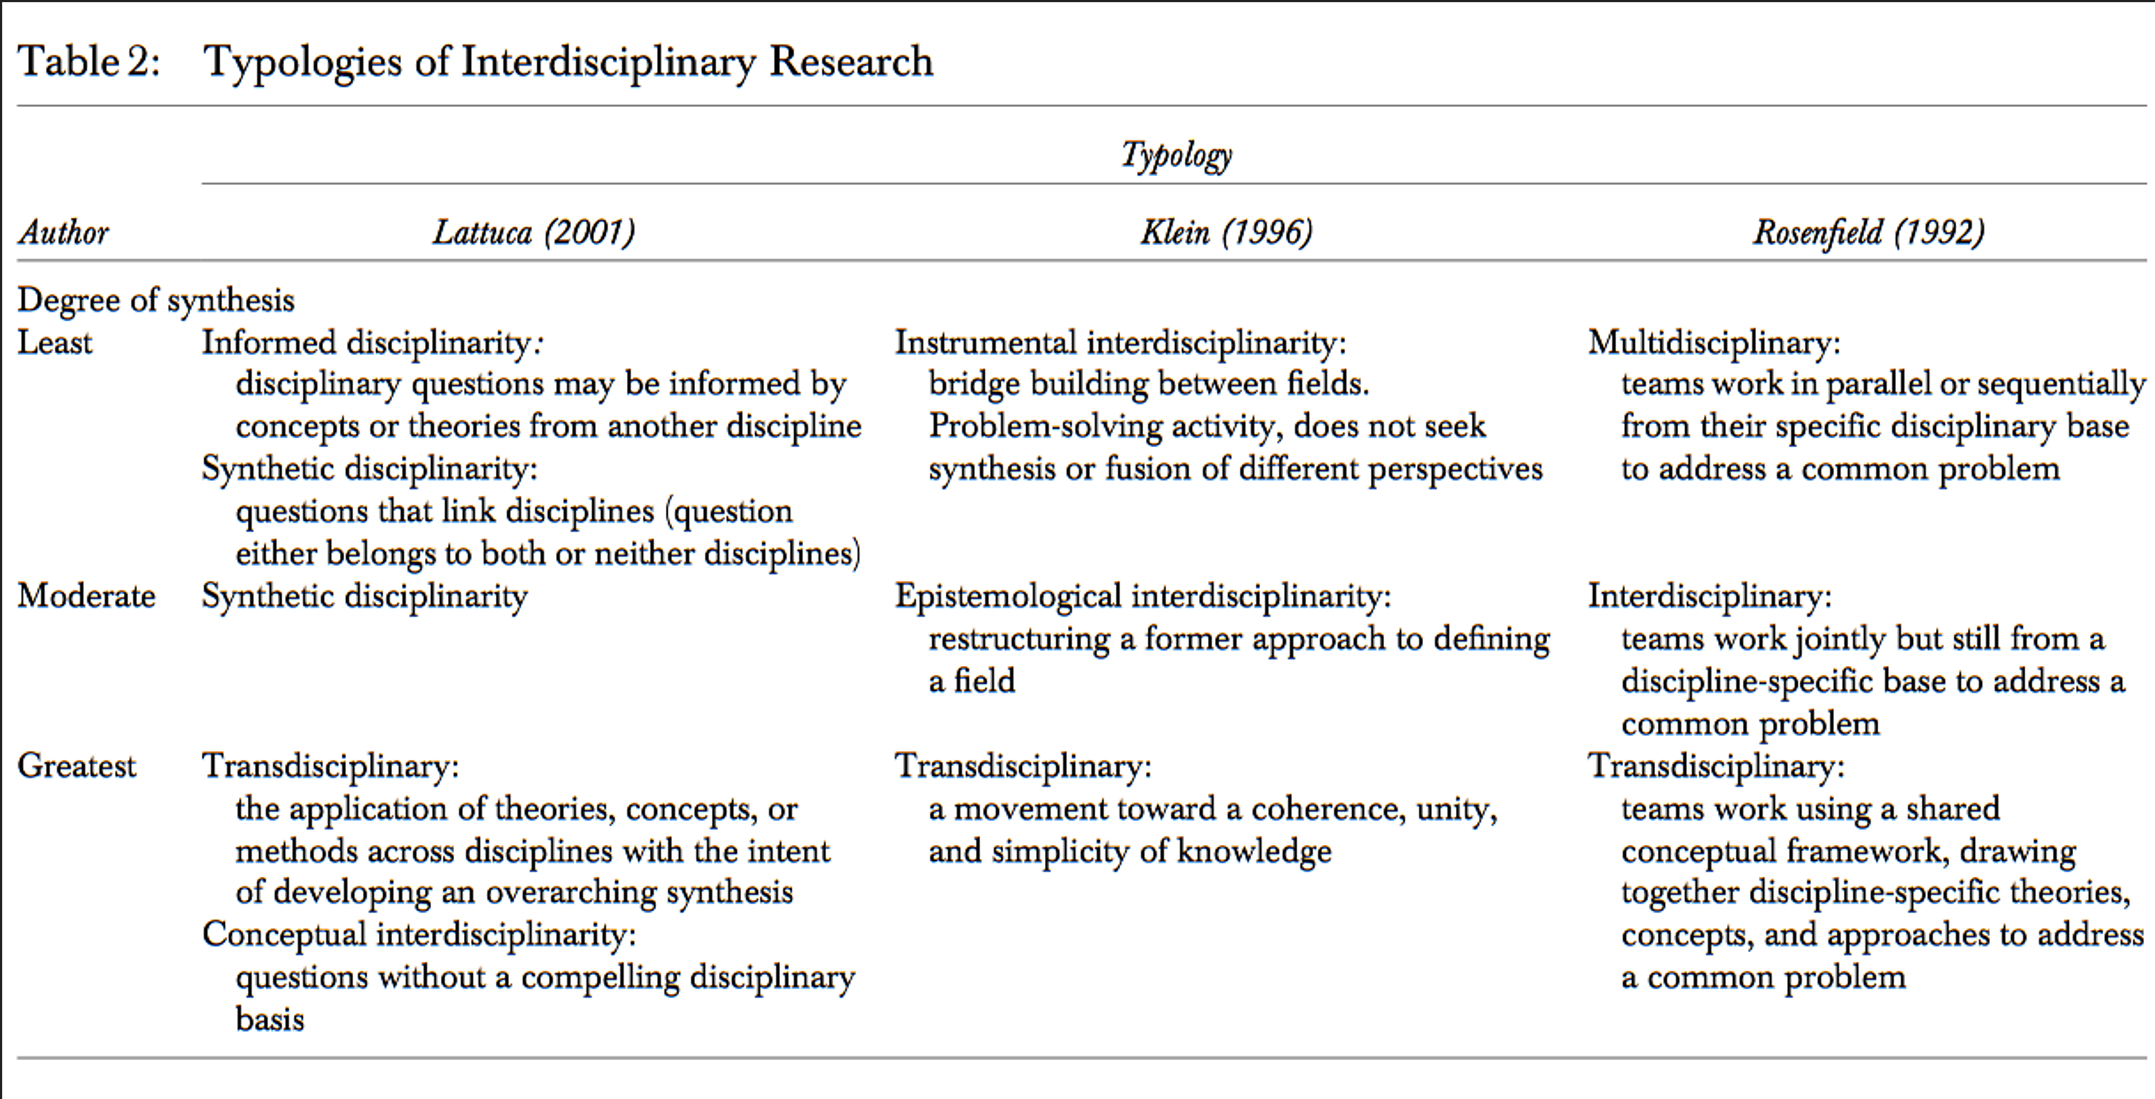 Typologies of Interdisciplinary Research from Aboelela et al. (2007)